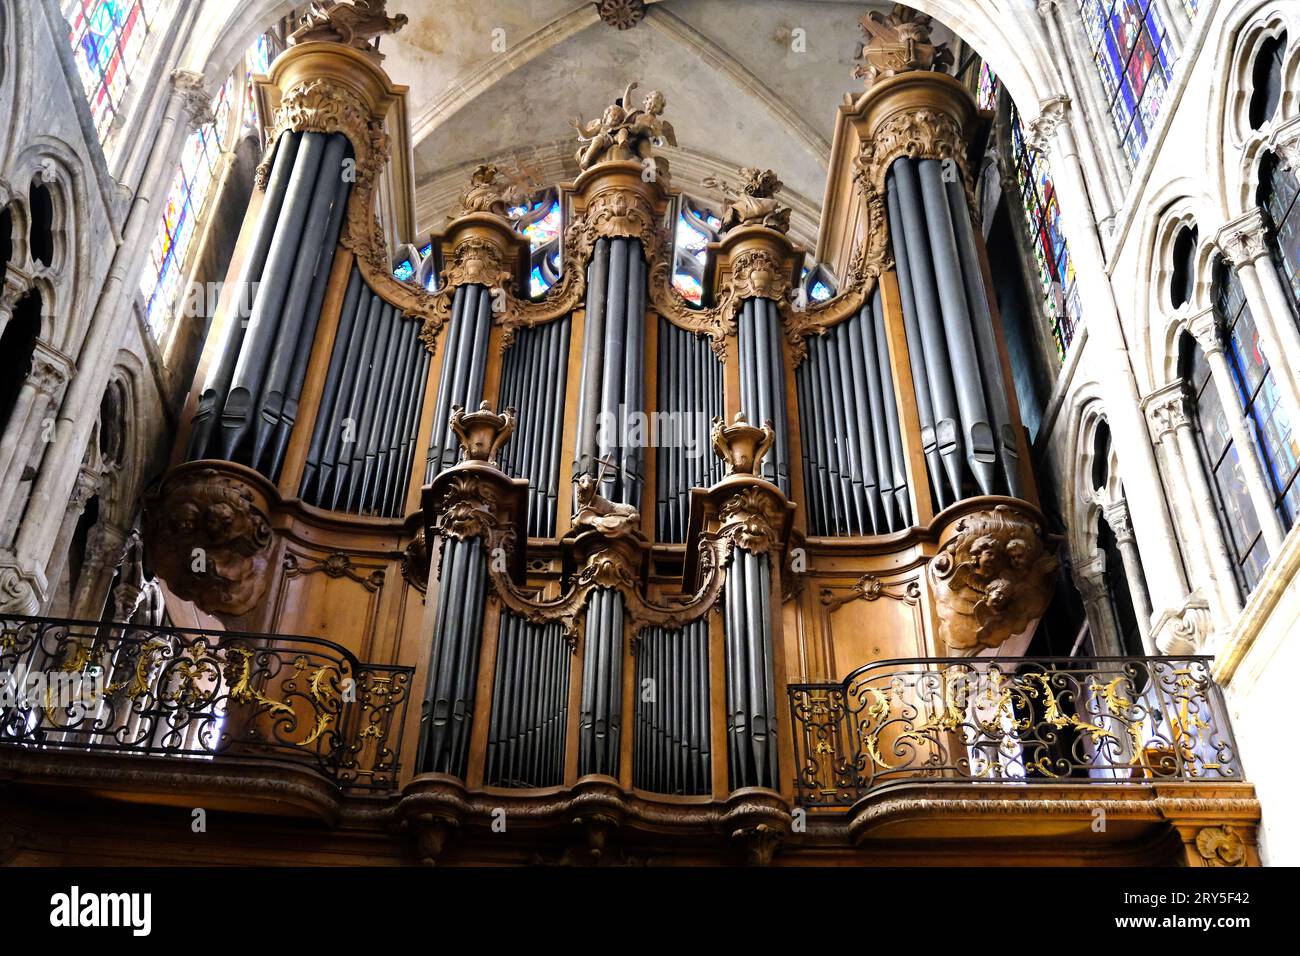 The Grand Organ in Saint Severin church in Paris France Stock Photo